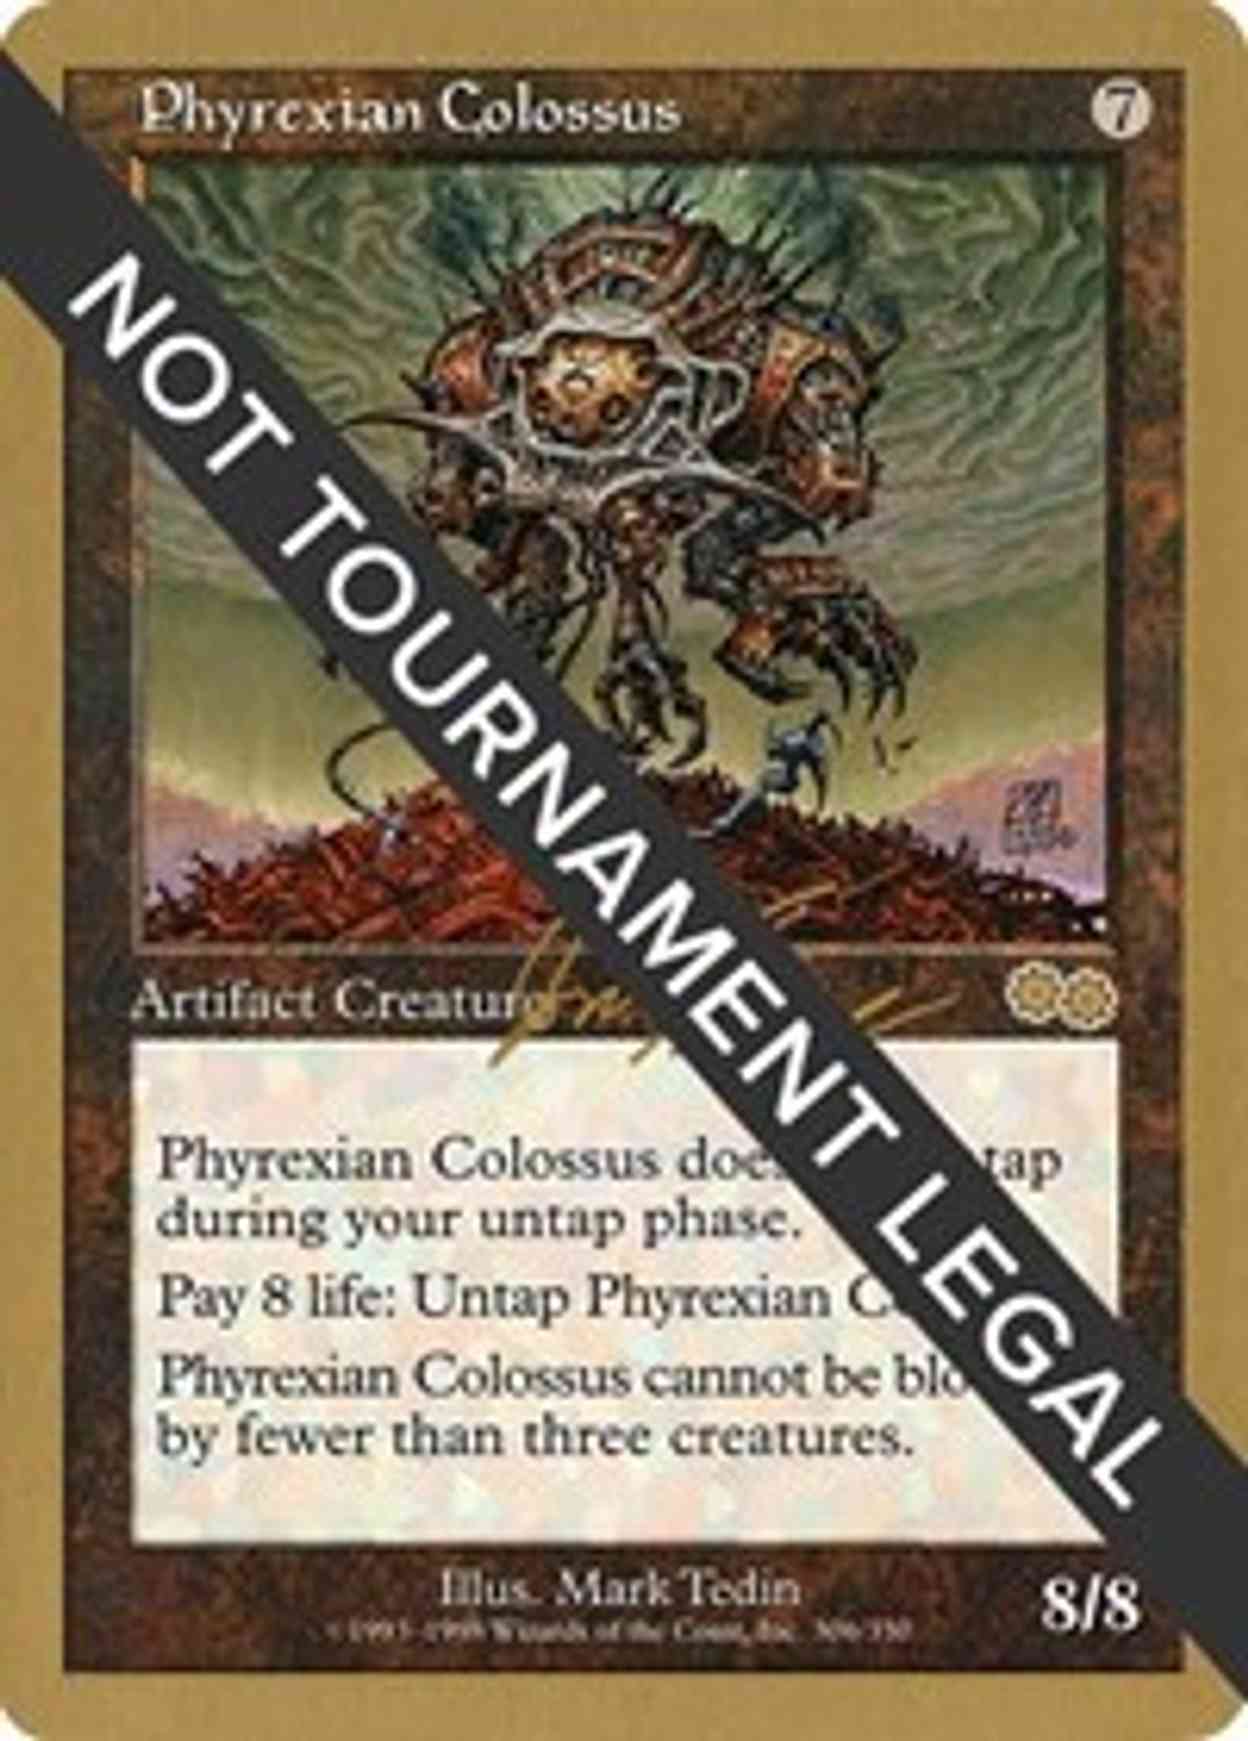 Phyrexian Colossus - 2000 Jon Finkel (USG) magic card front